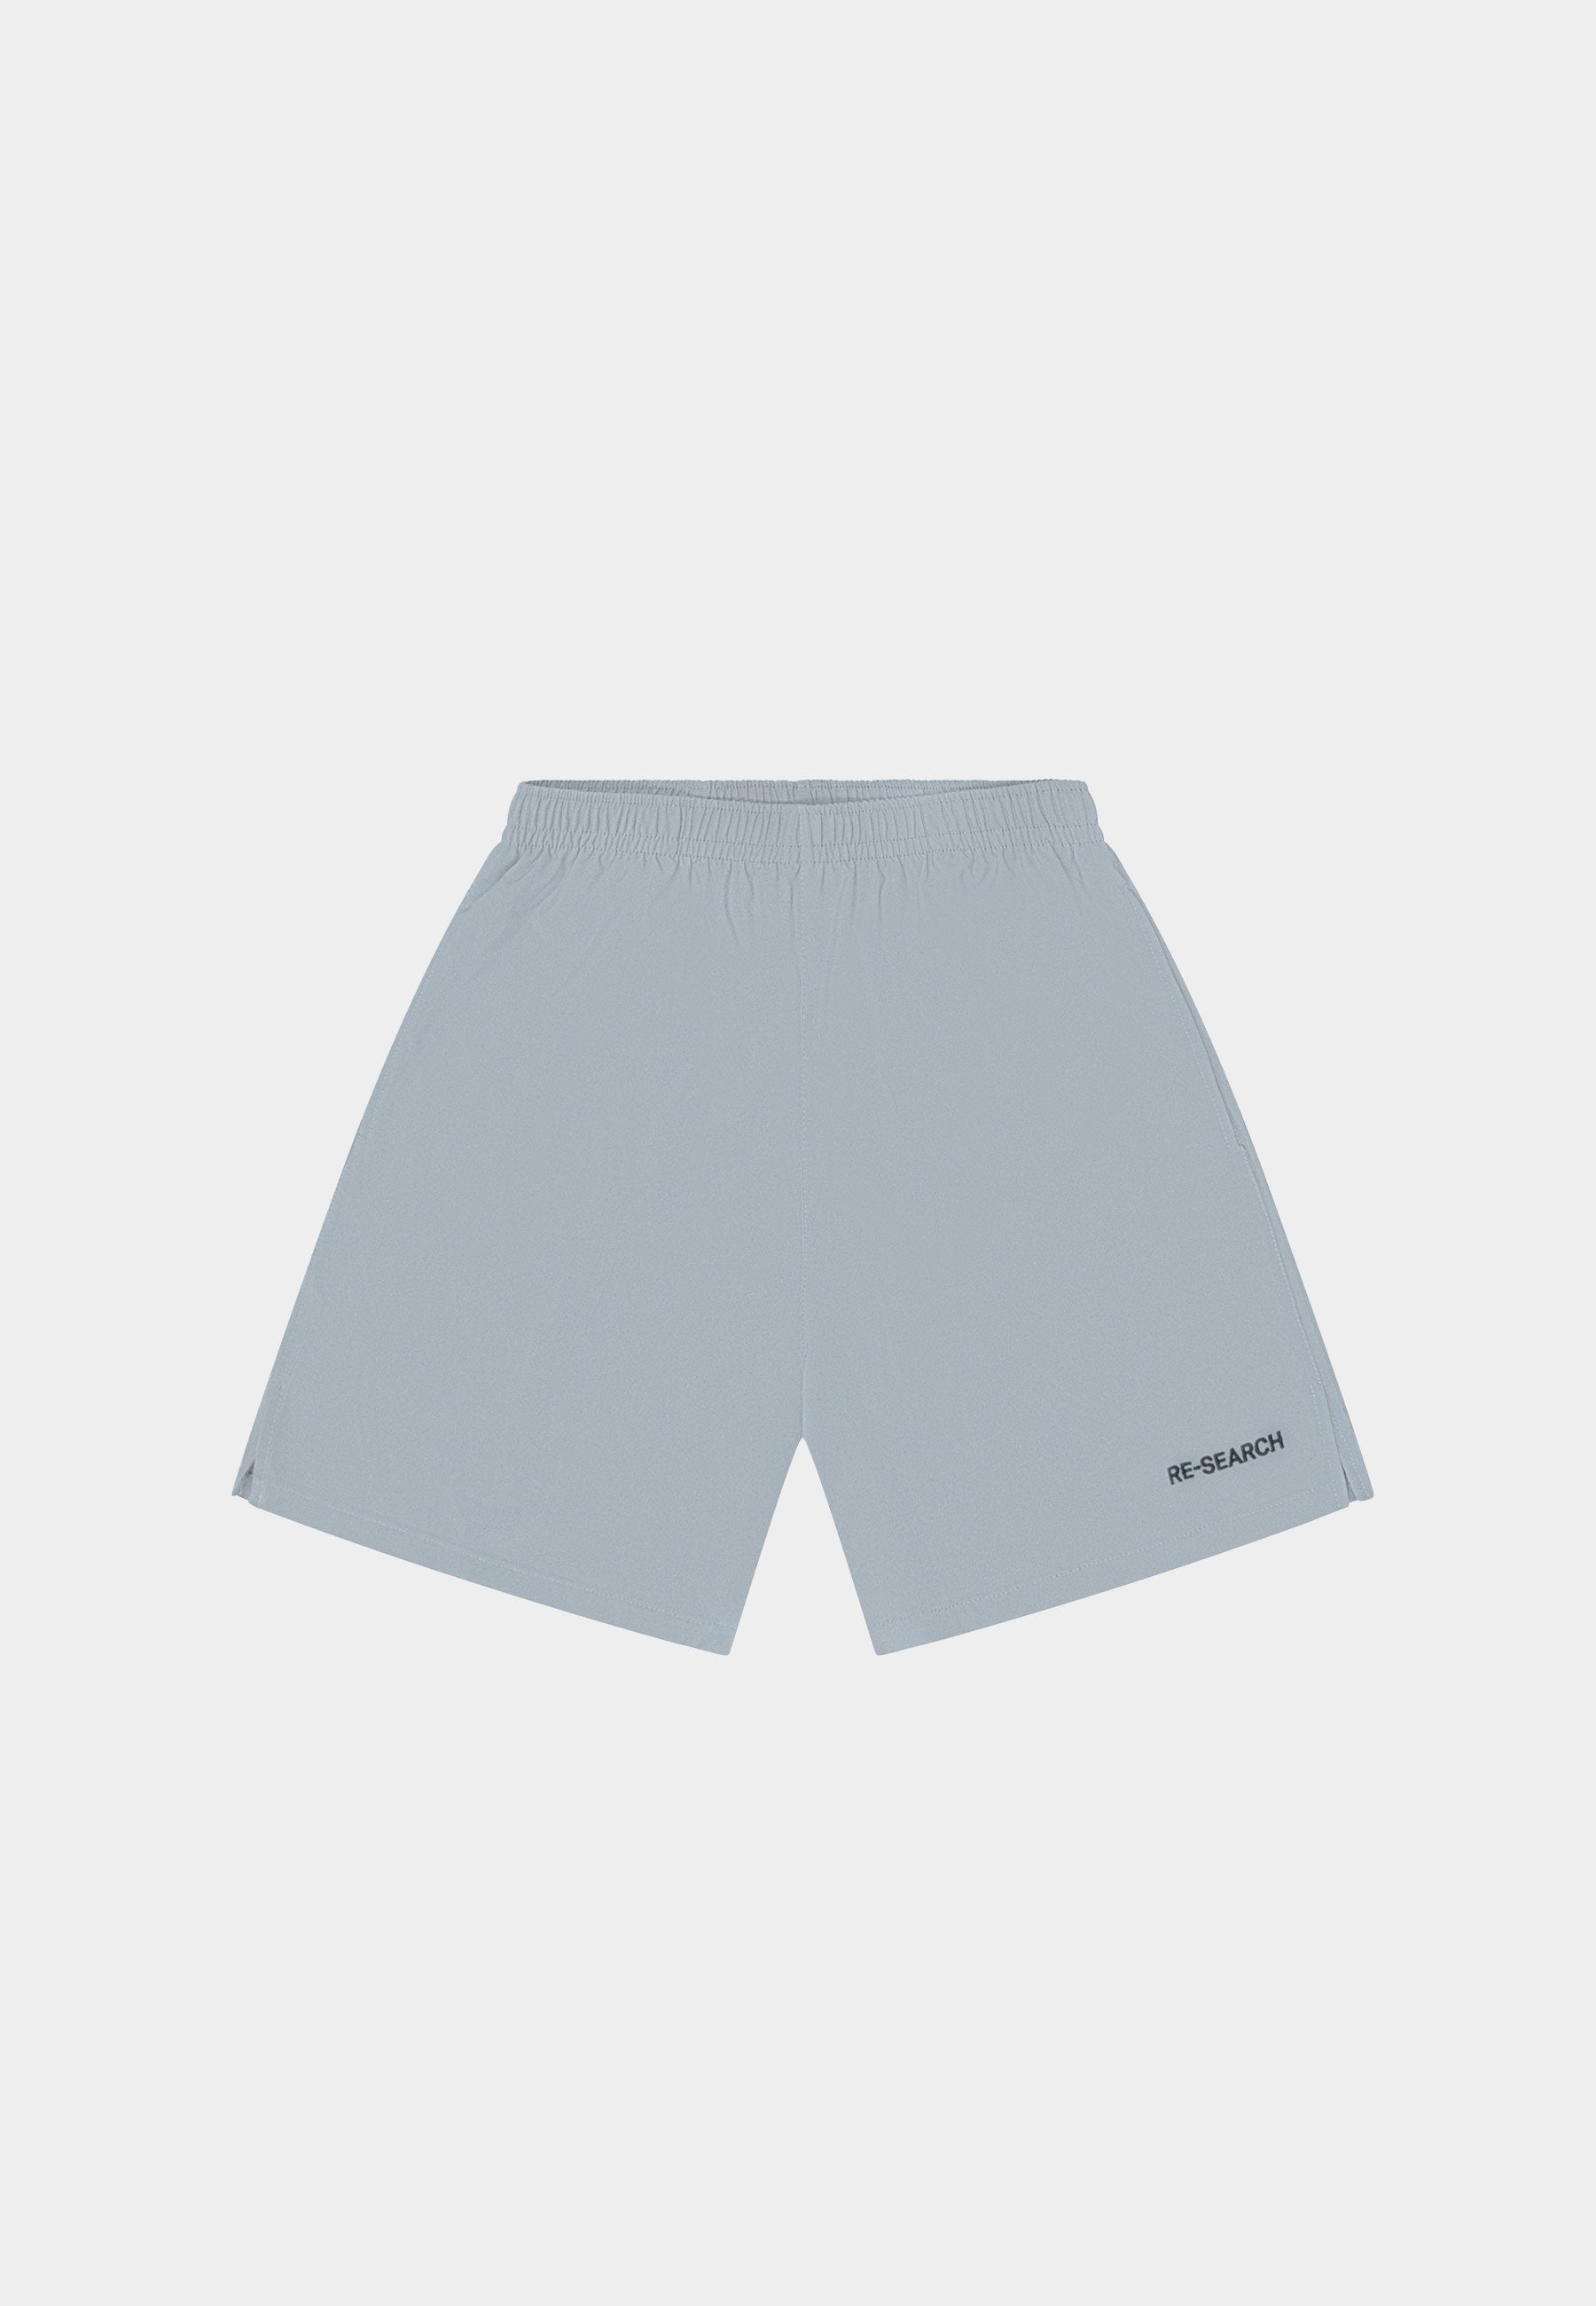 All Terrain Shorts - Schwerkraft Grau